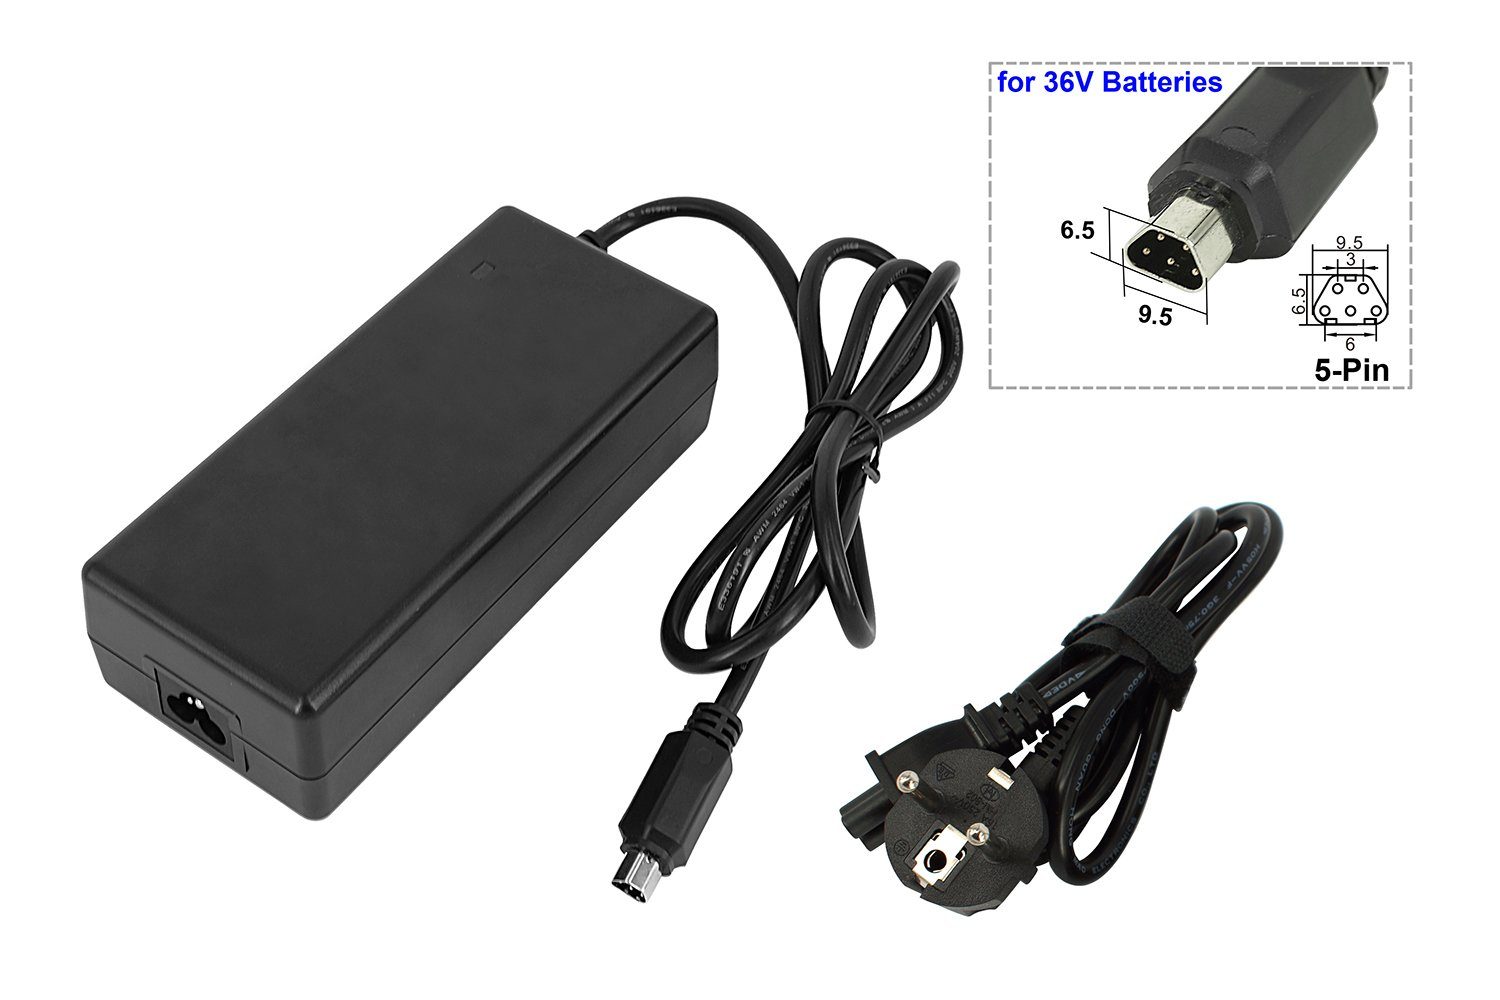 PowerSmart CAA081020E Batterie-Ladegerät (2A AC Adapter für 36V LI-ION  E-Bike Akku mit 5-Pin)